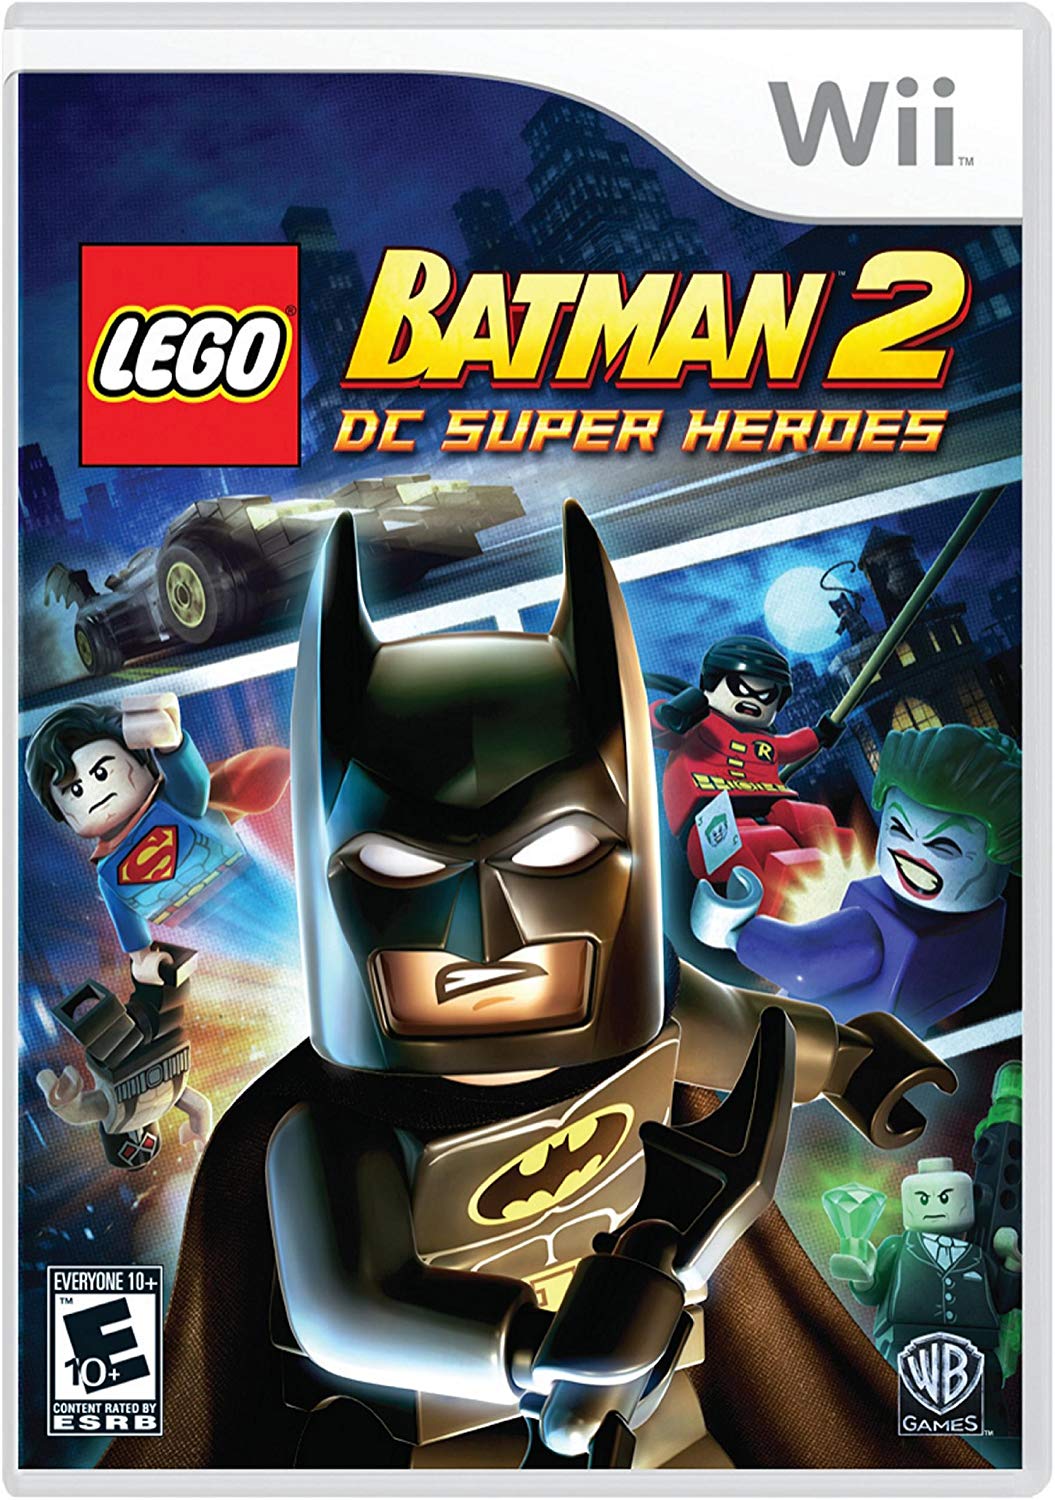 WII: LEGO BATMAN 2: DC SUPER HEROES (COMPLETE)